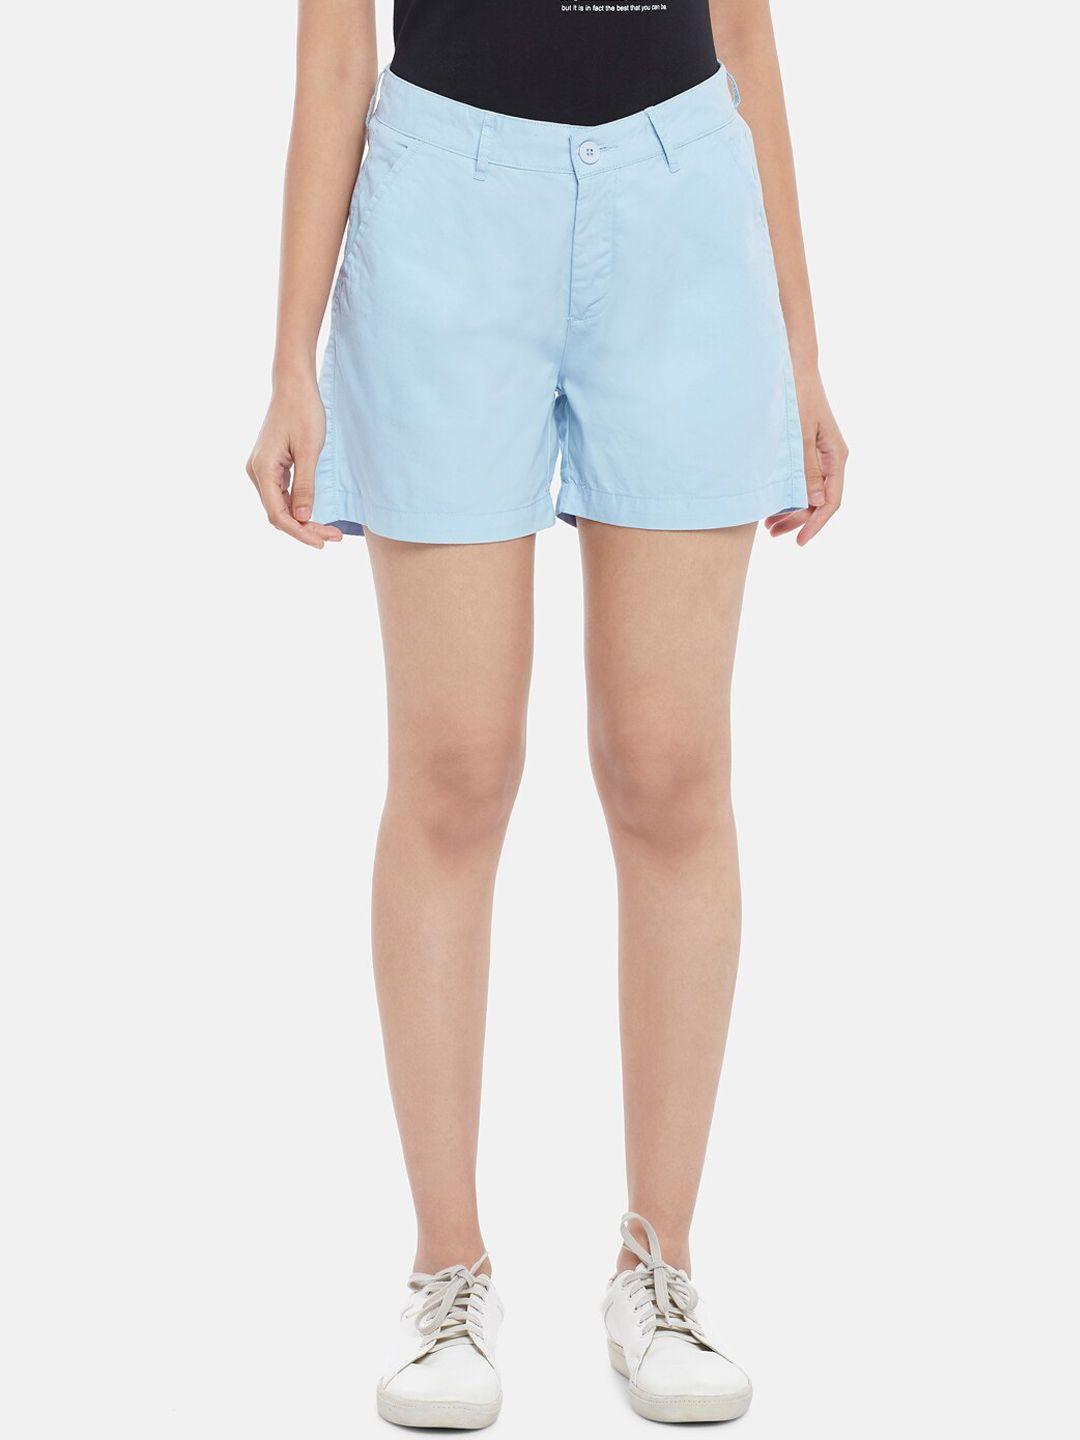 honey-by-pantaloons-women-blue-solid-shorts